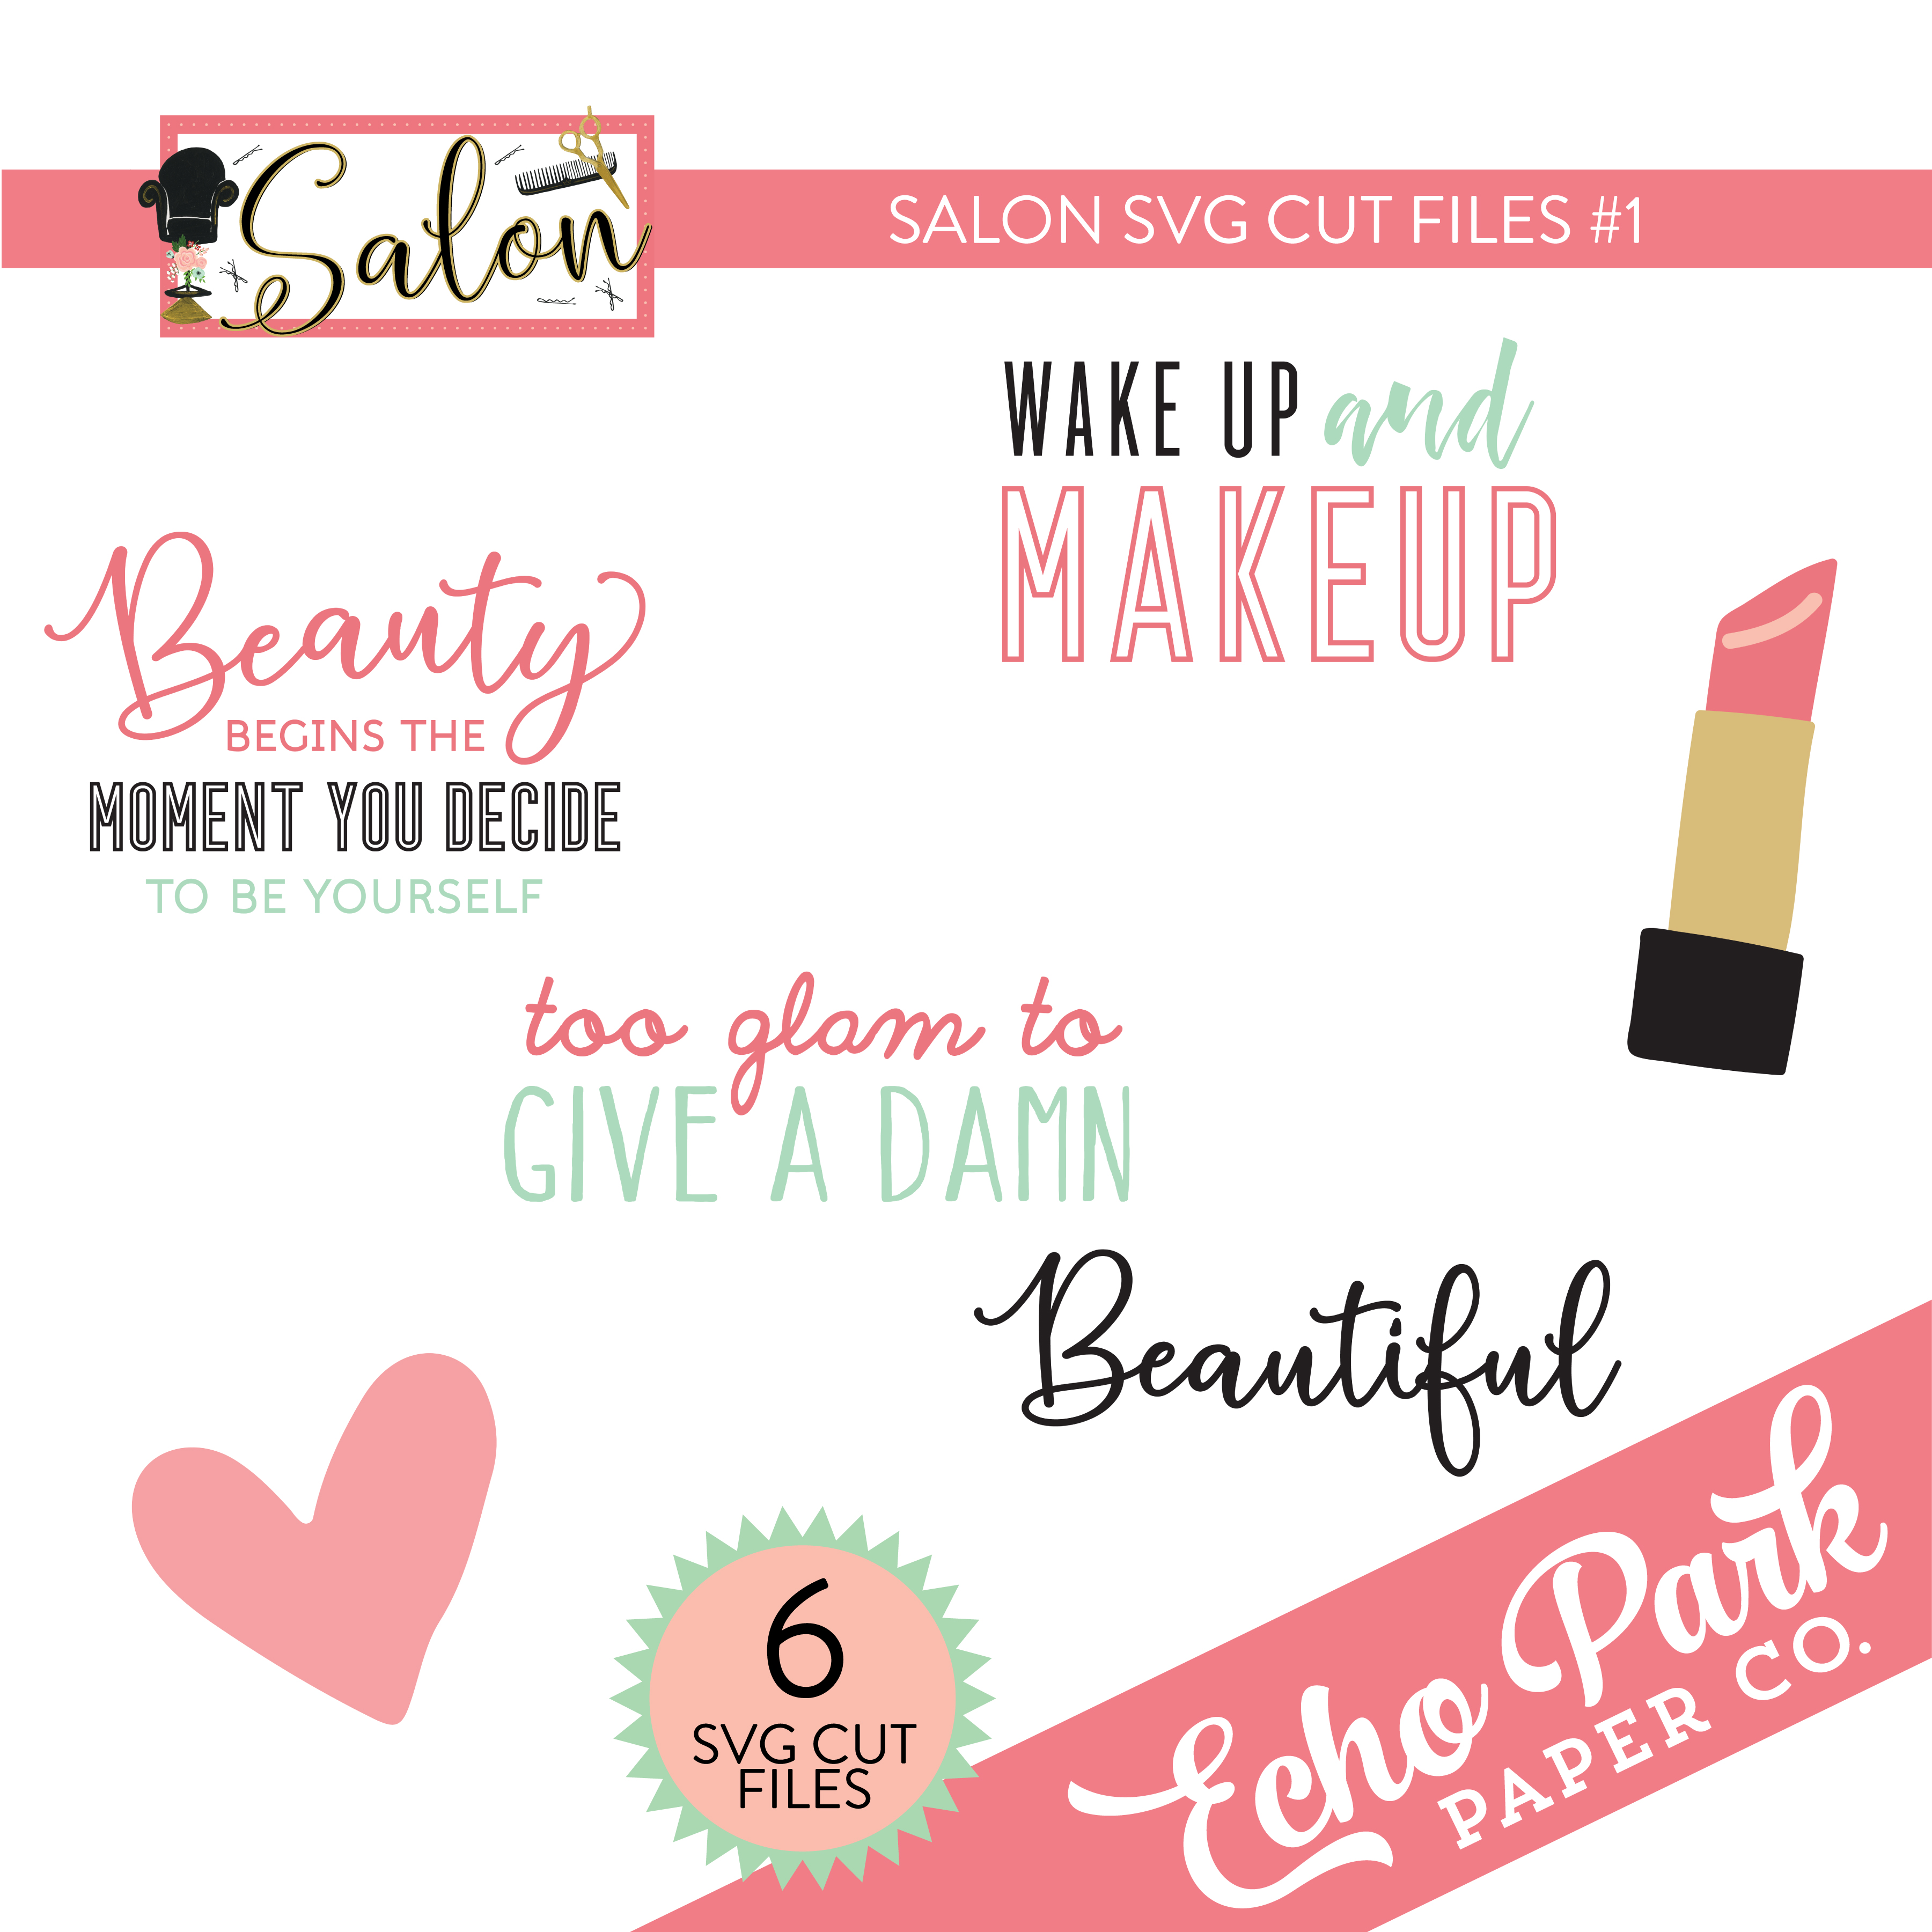 Salon SVG Cut Files #1